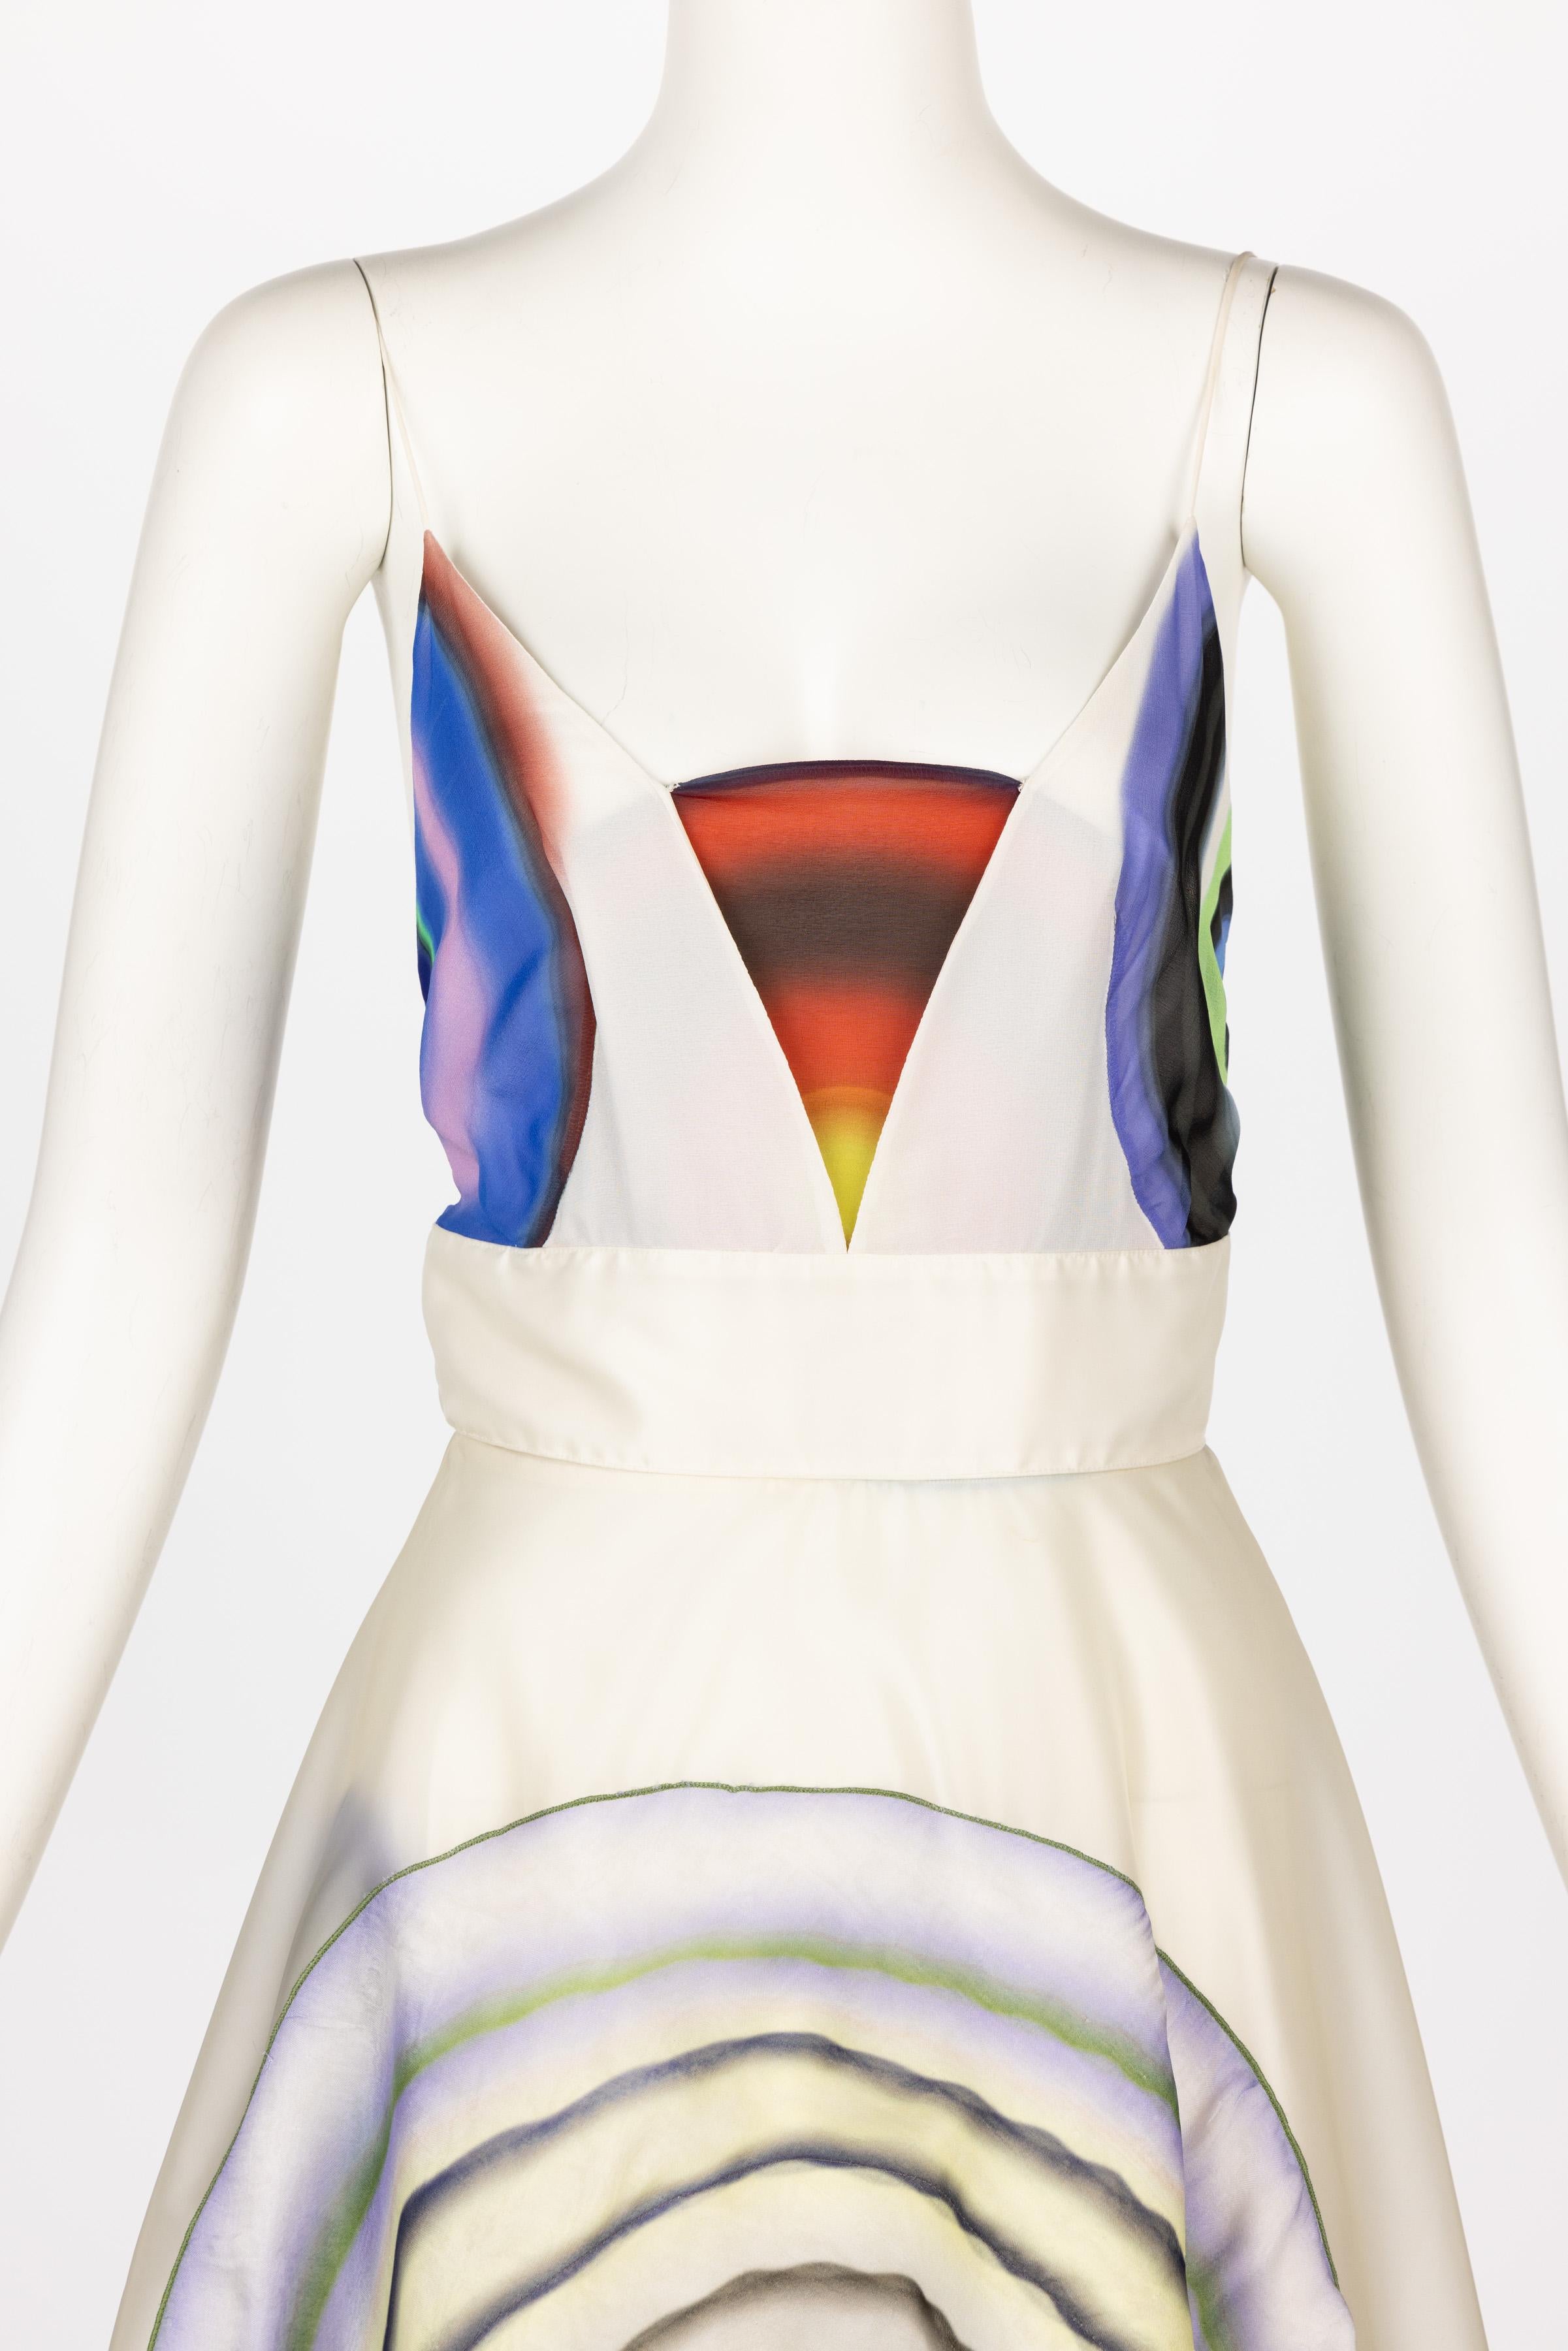 Fendi Karl Lagerfeld Silk Print Dress S/S 2008 Runway For Sale 3